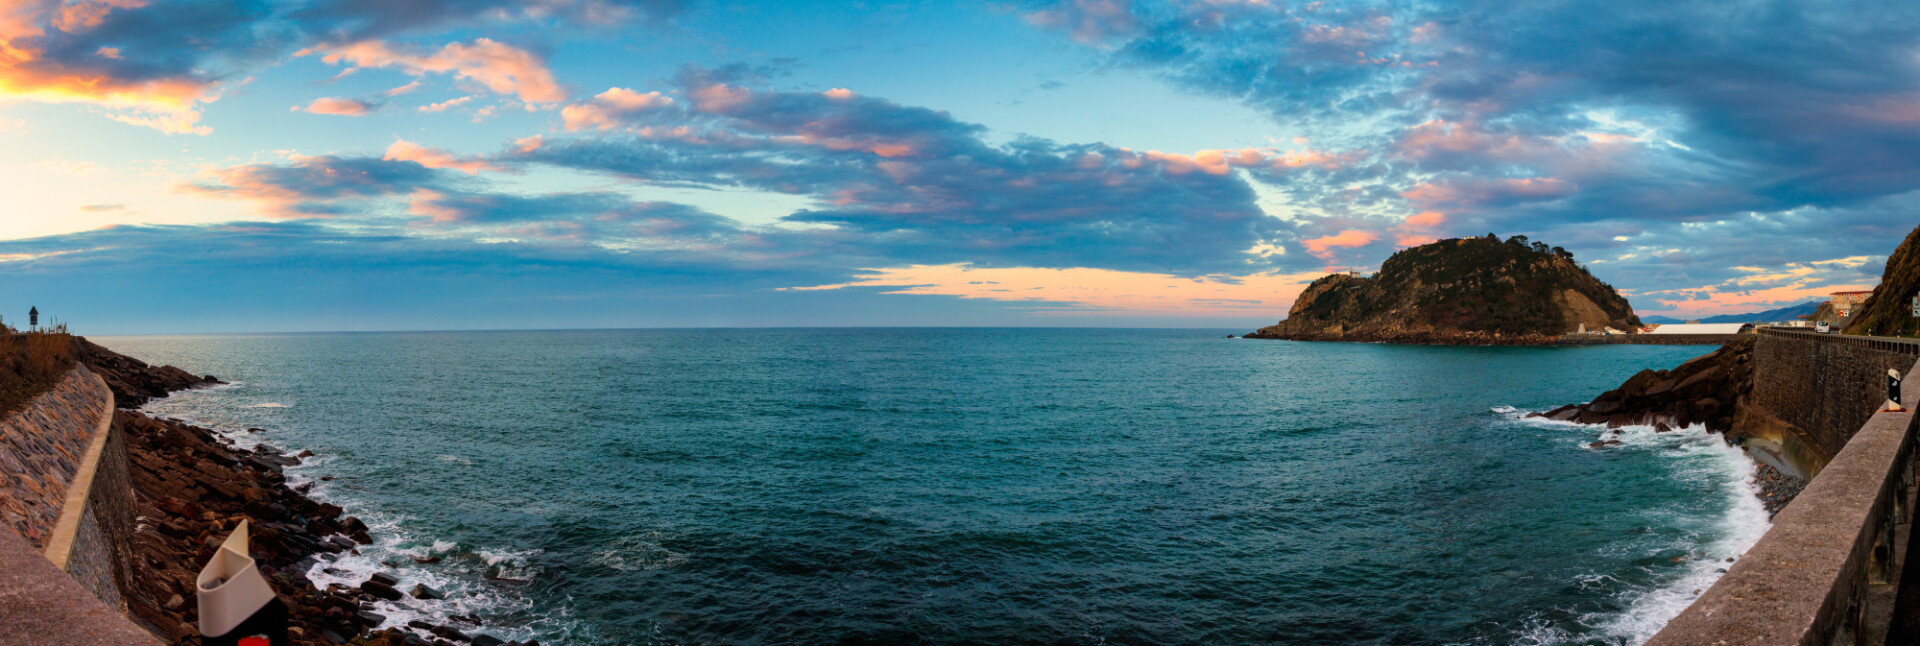 View over the beautiful bay of Donostia-San Sebastian in Spain